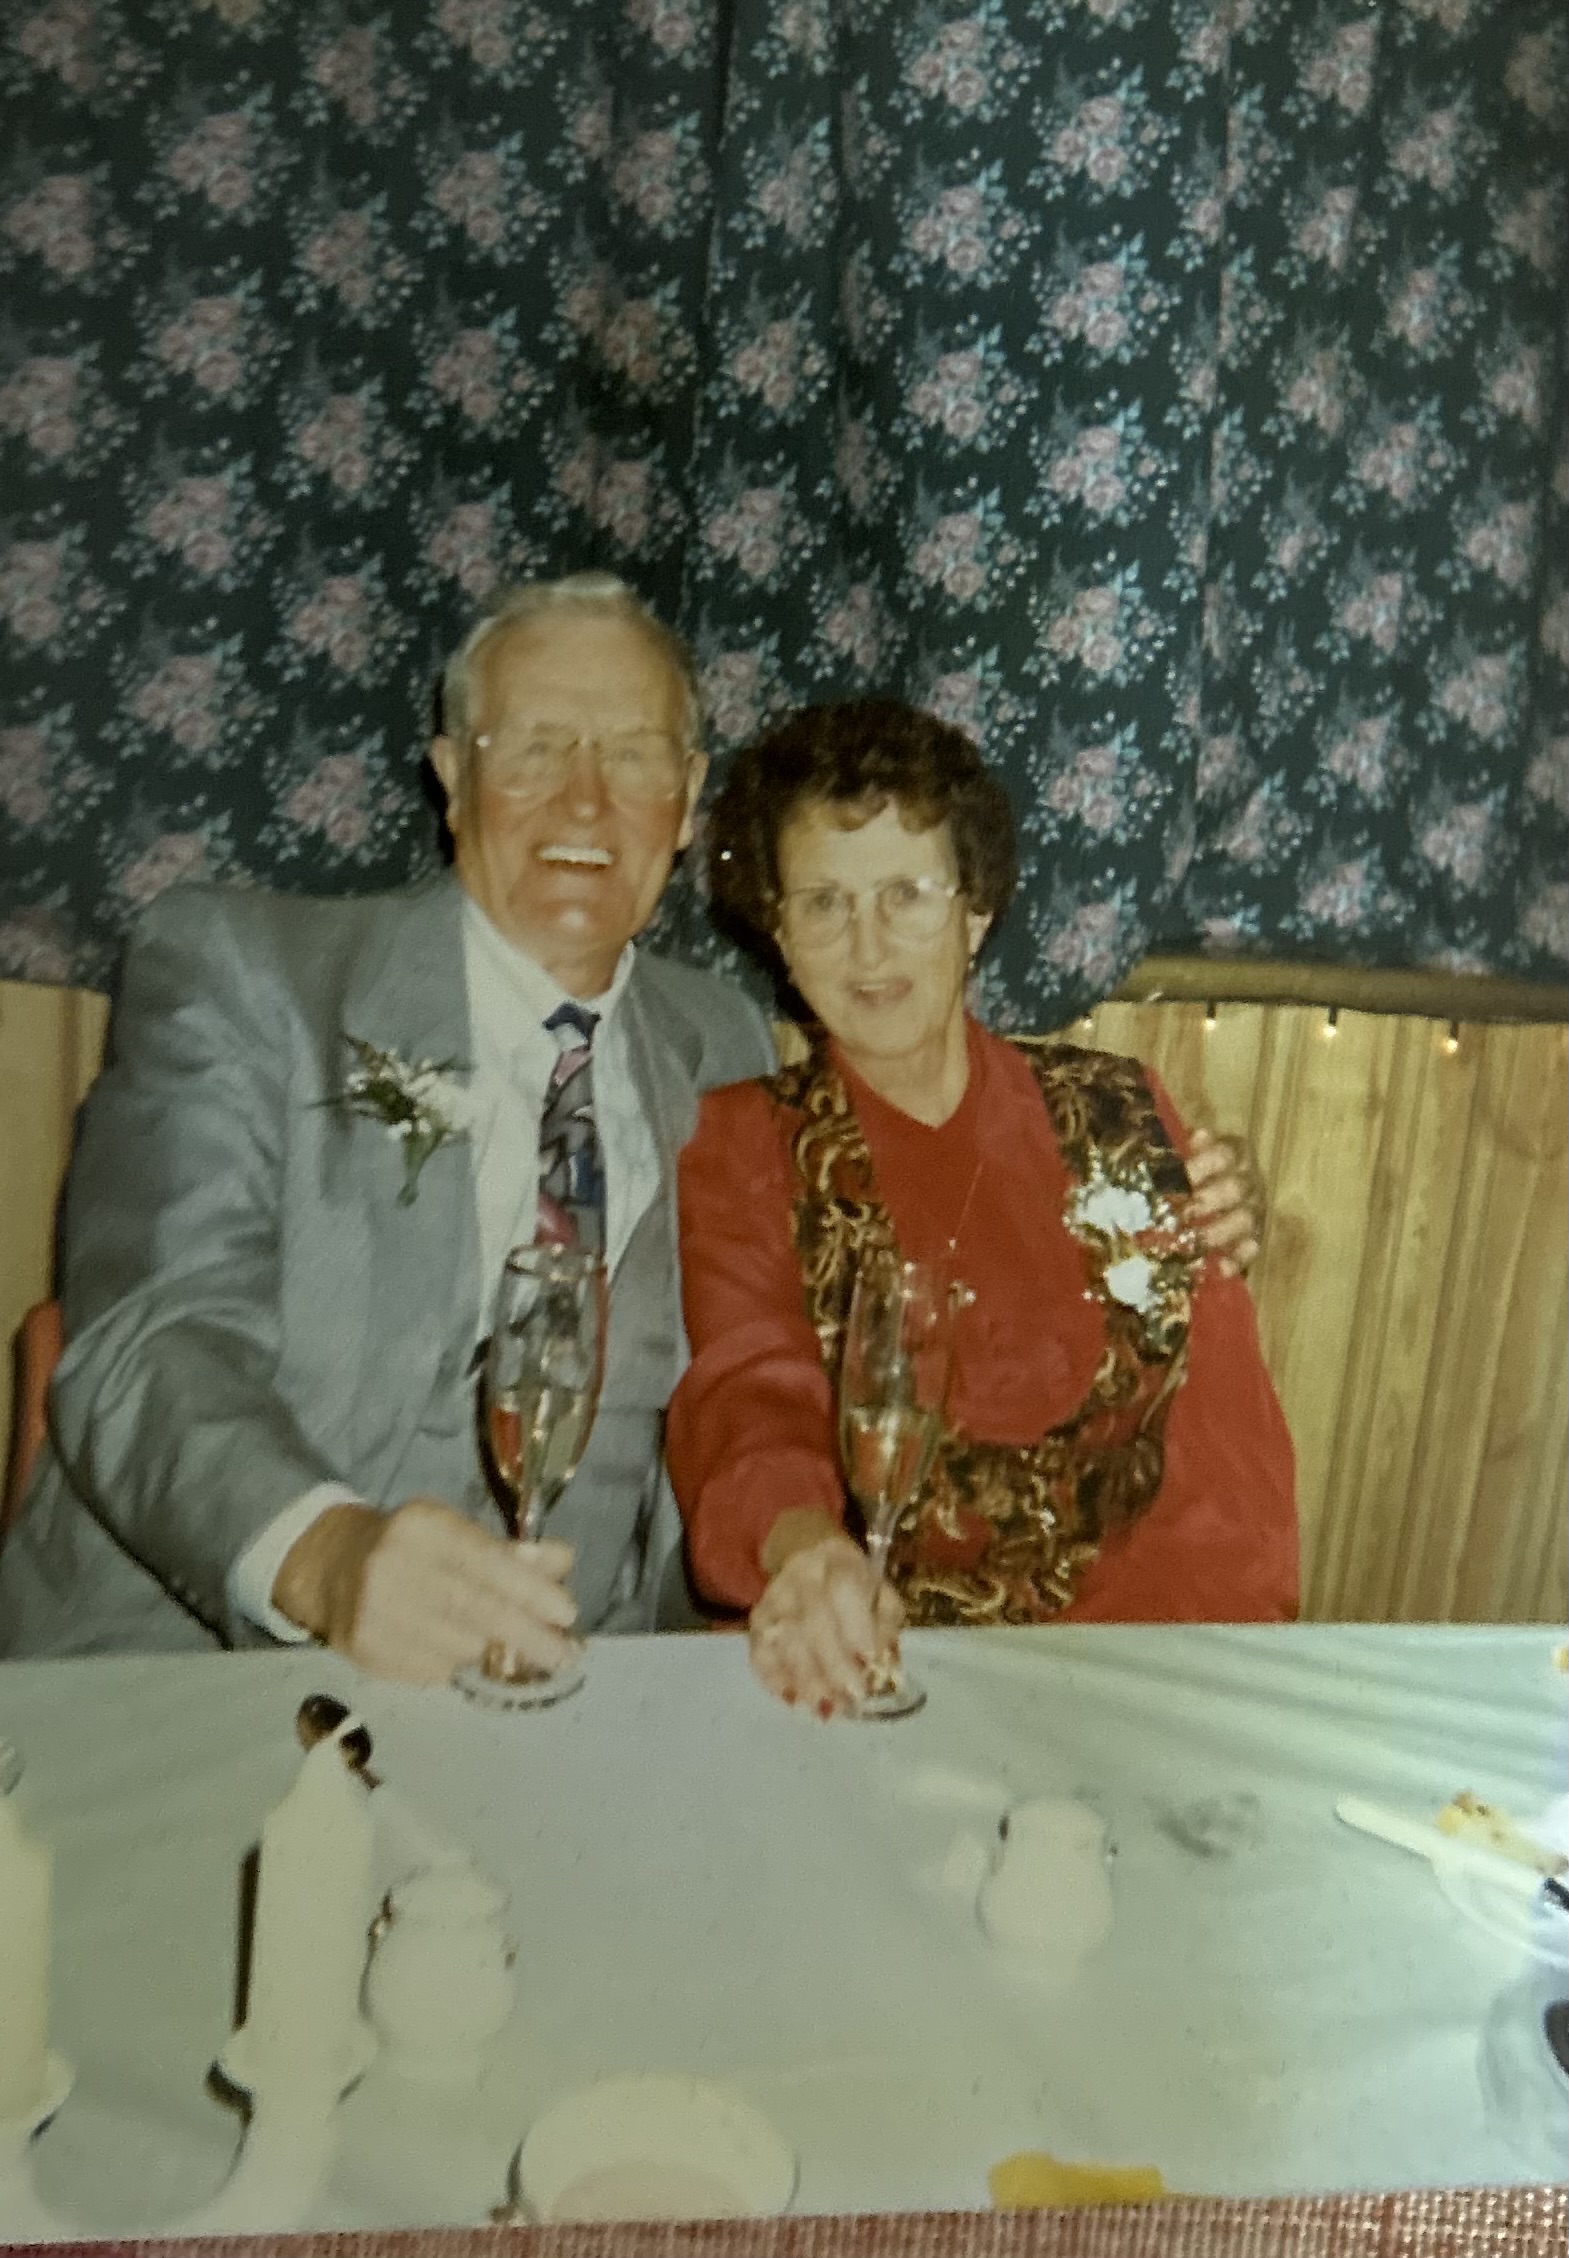 Memory of Bill & Winnie Stratton